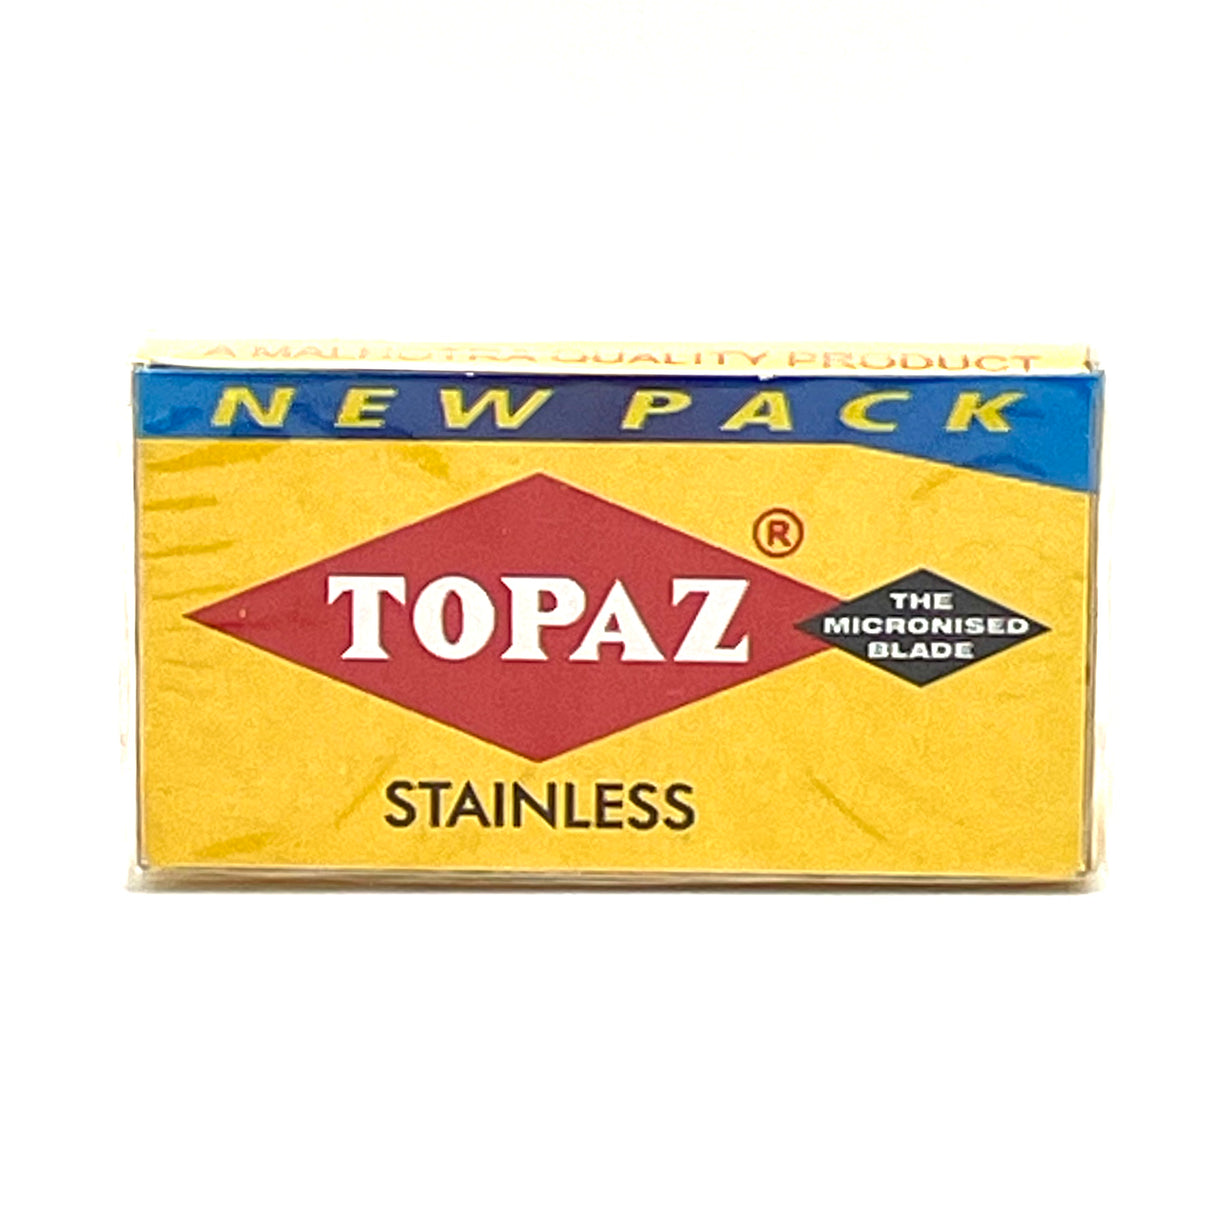 Topaz - Stainless Double Edge Razor Blades - Pack of 5 Blades